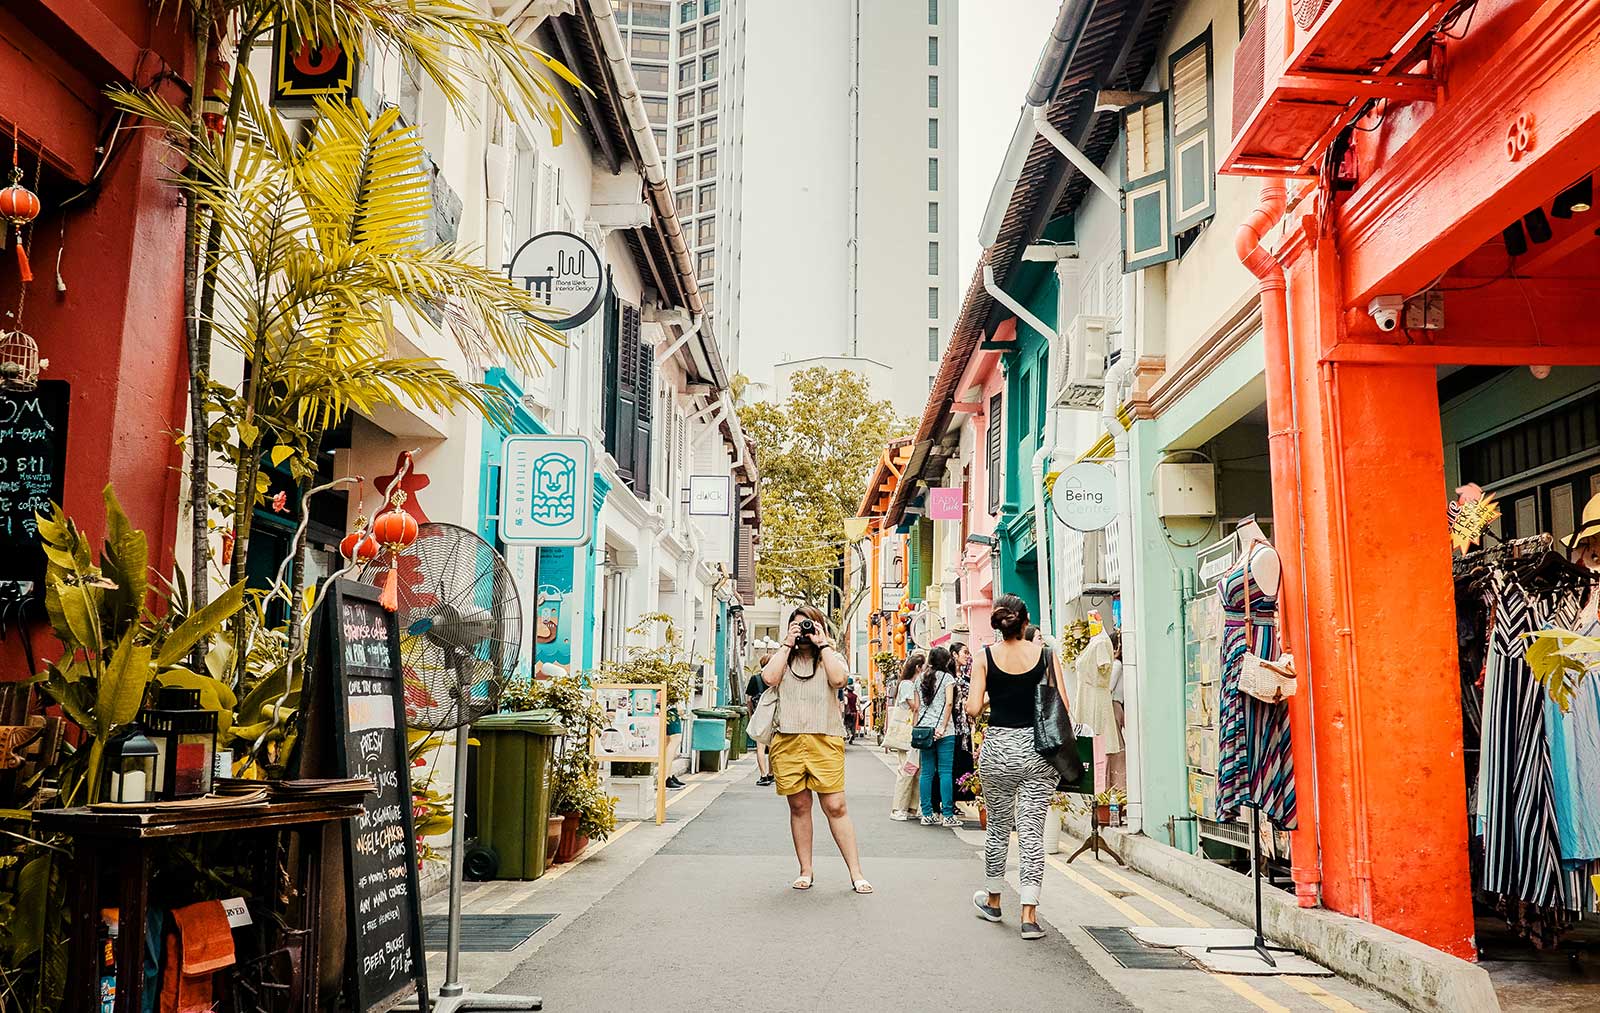 The colourful shops of Haji Lane in Singapore's Kampong Glam neighbourhood